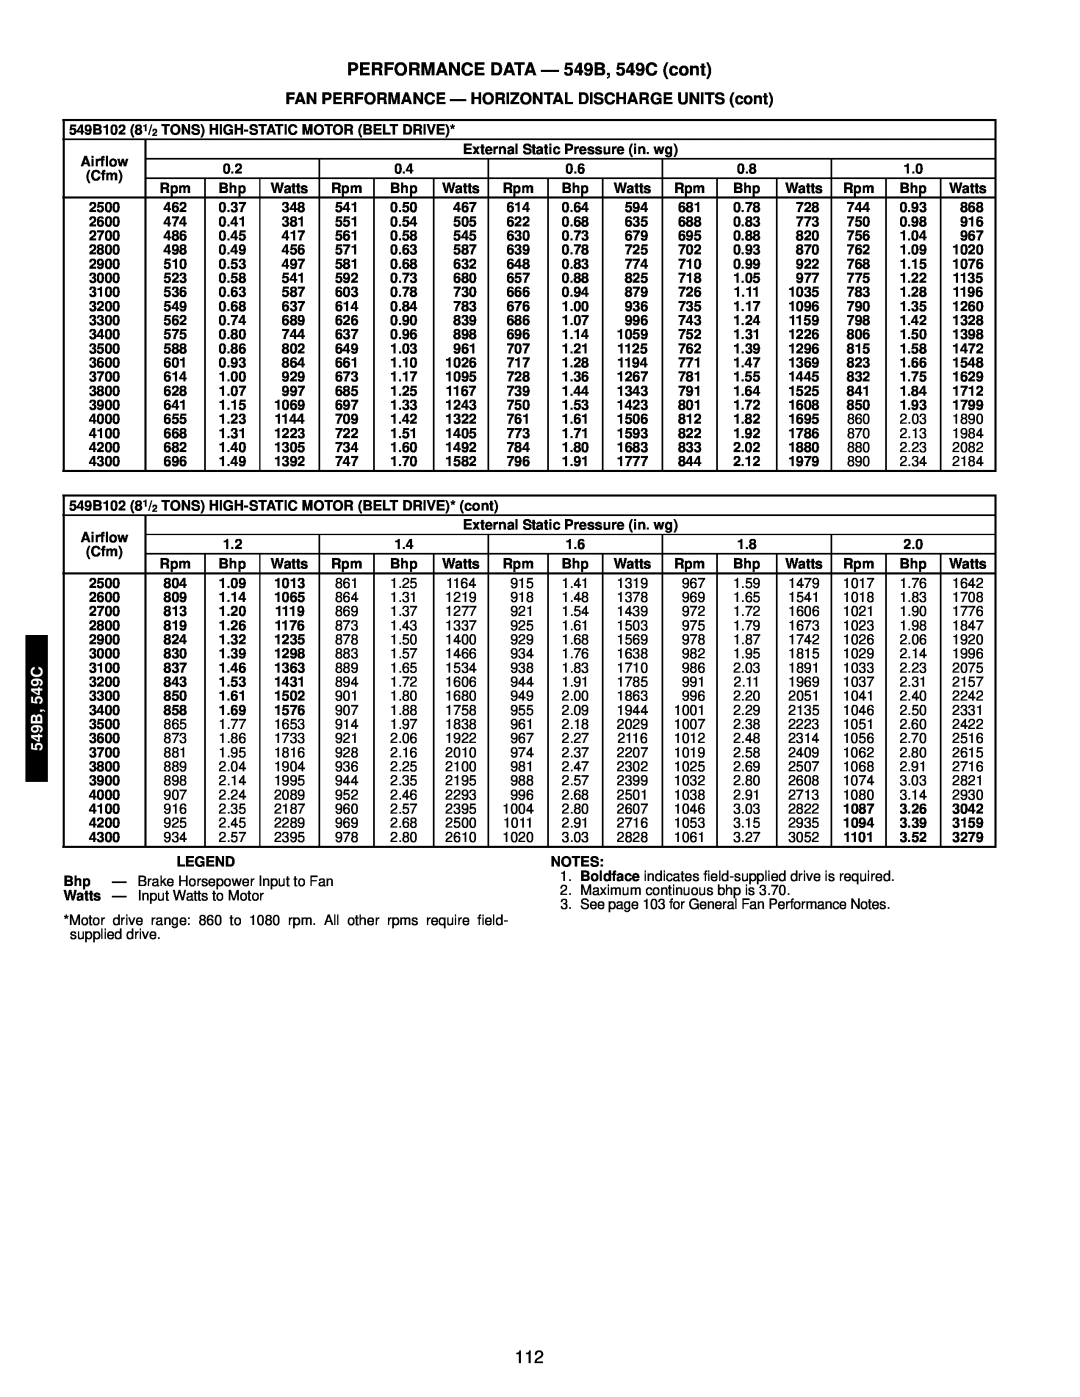 Bryant manual PERFORMANCE DATA — 549B, 549C cont, FAN PERFORMANCE — HORIZONTAL DISCHARGE UNITS cont 